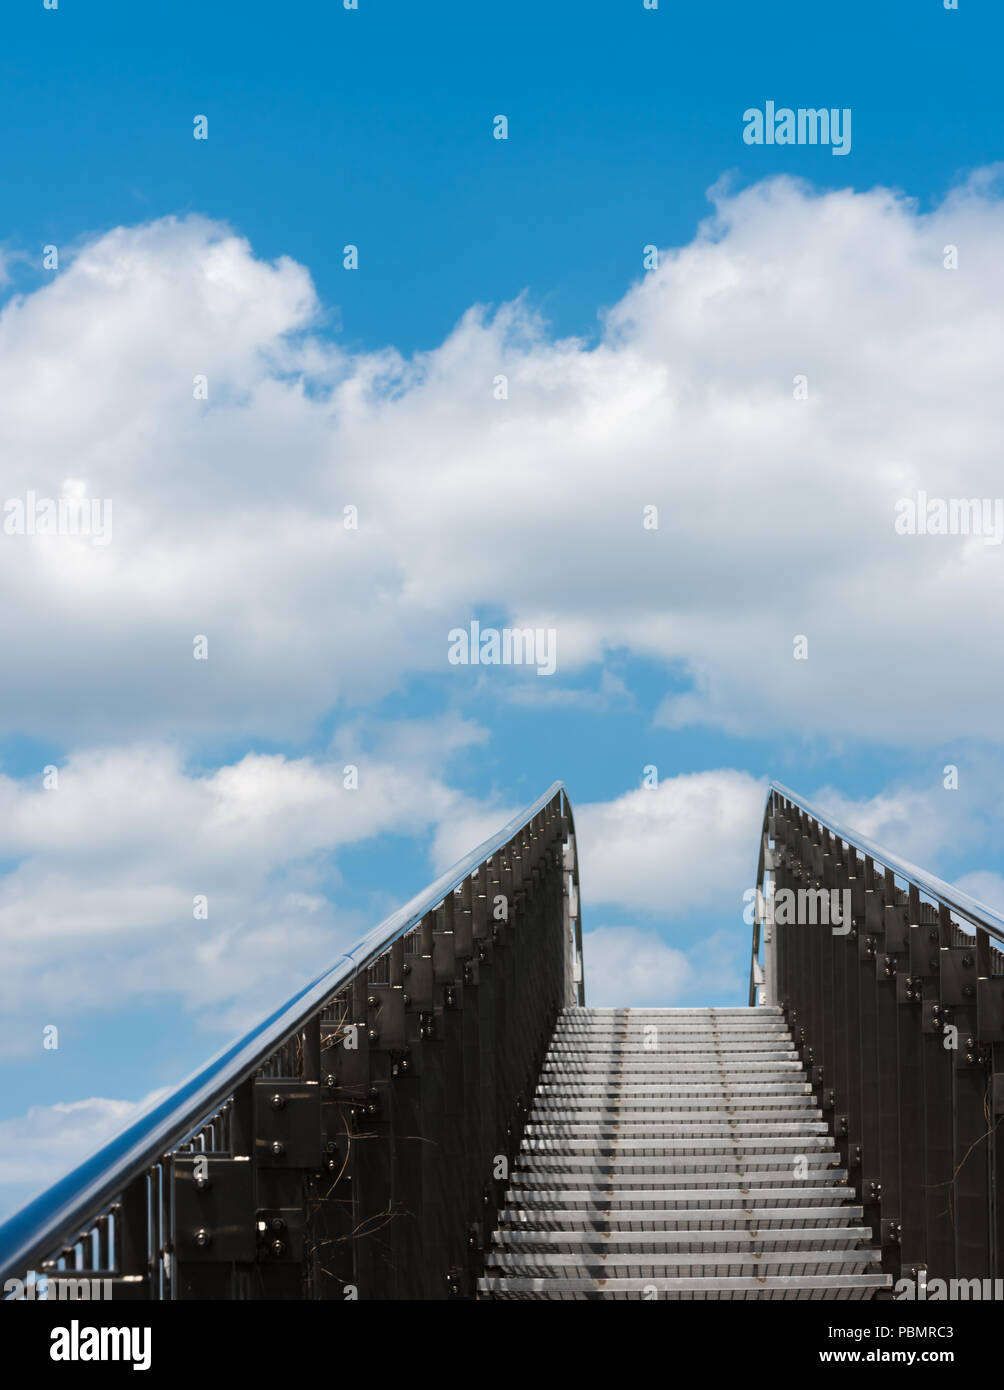 few steps to heaven Stock Photo